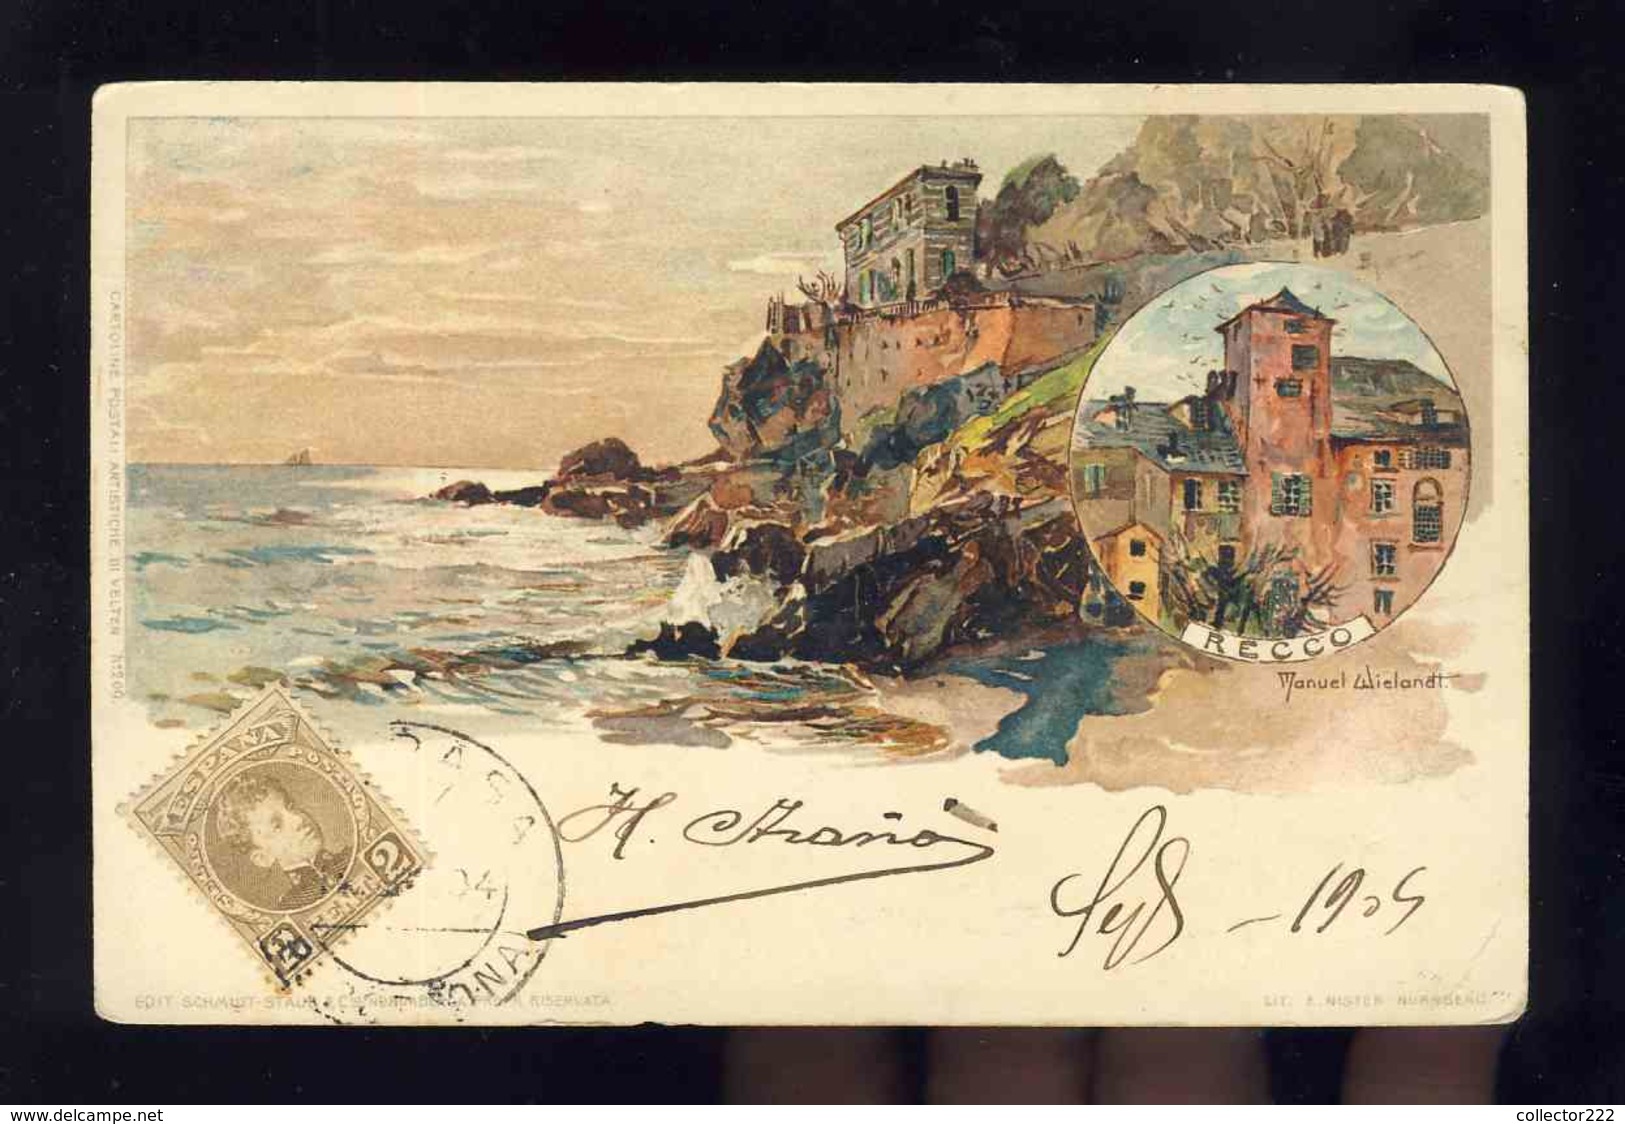 Carte Postale Illustree Par Manuel Wielandt: Recco (116066) - Wielandt, Manuel